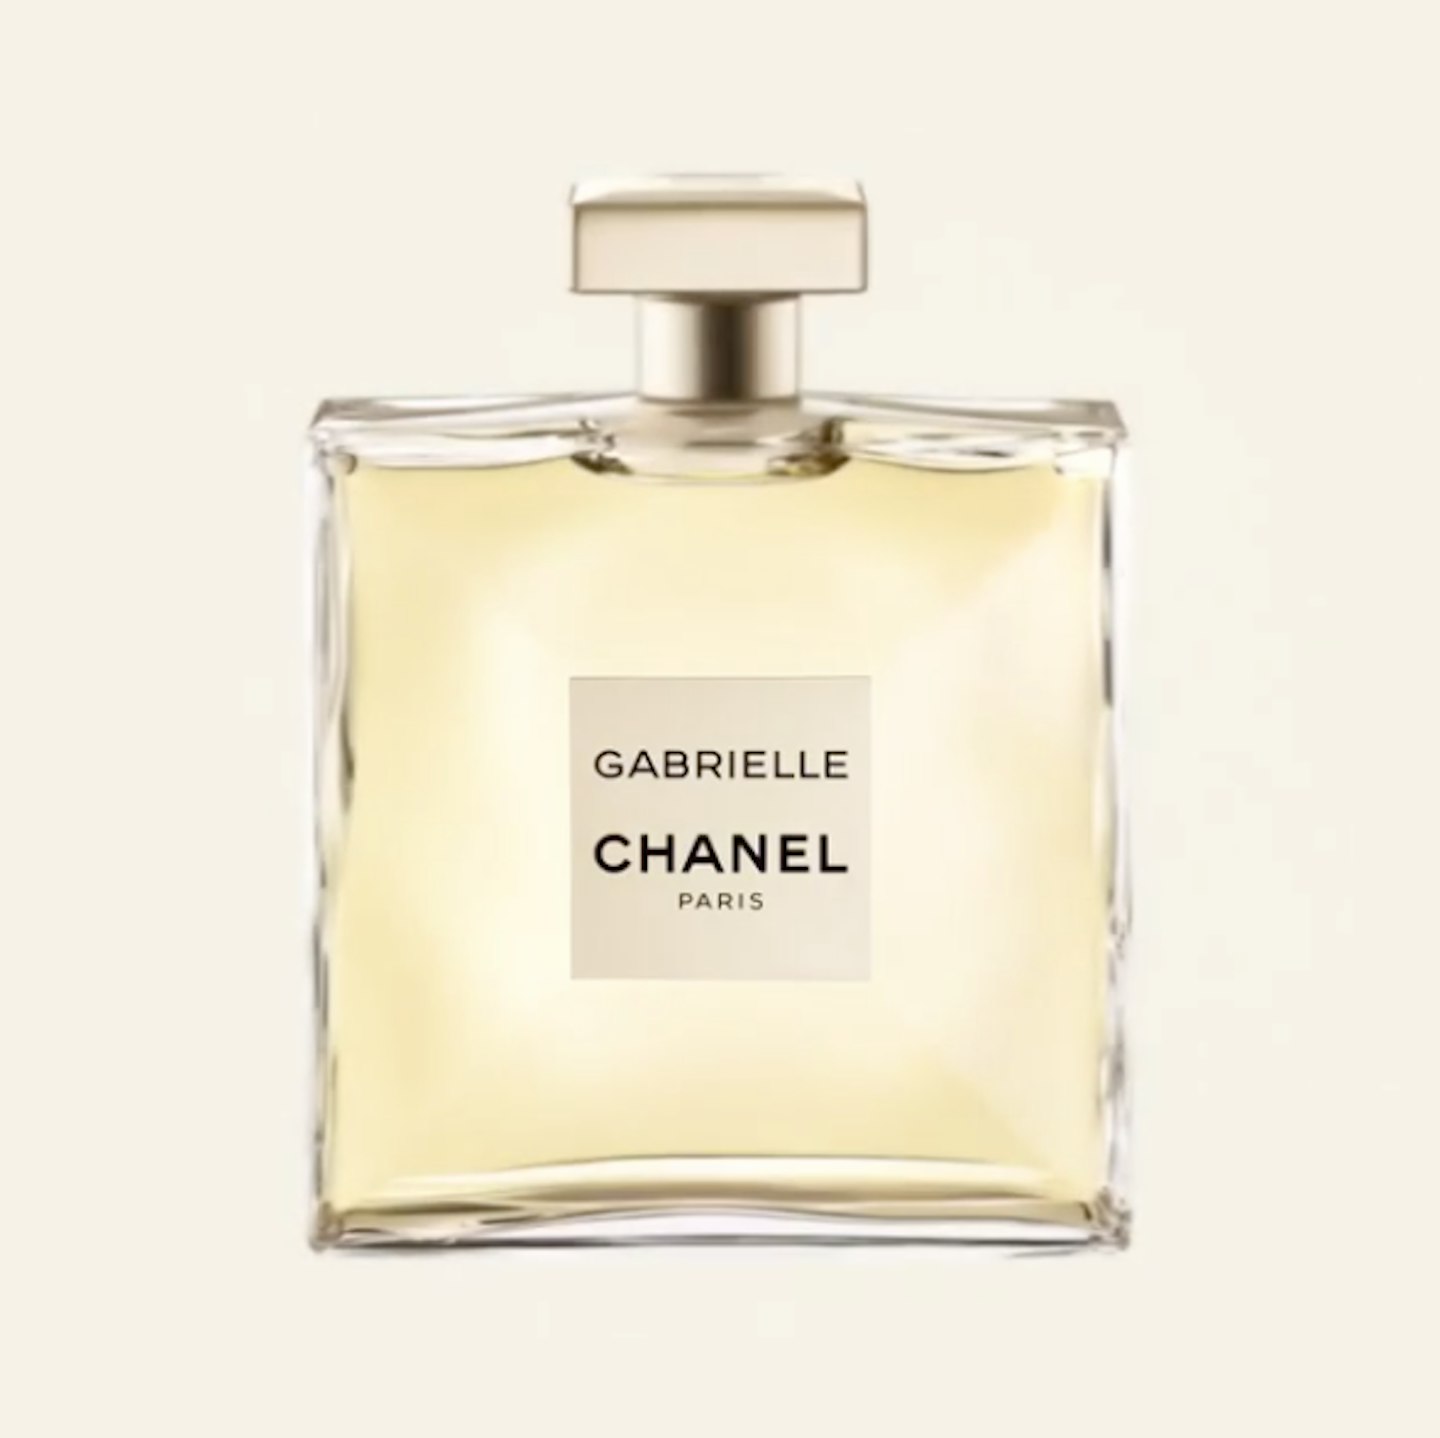 Kristen Stewart is the face of Chanel's Gabrielle perfume